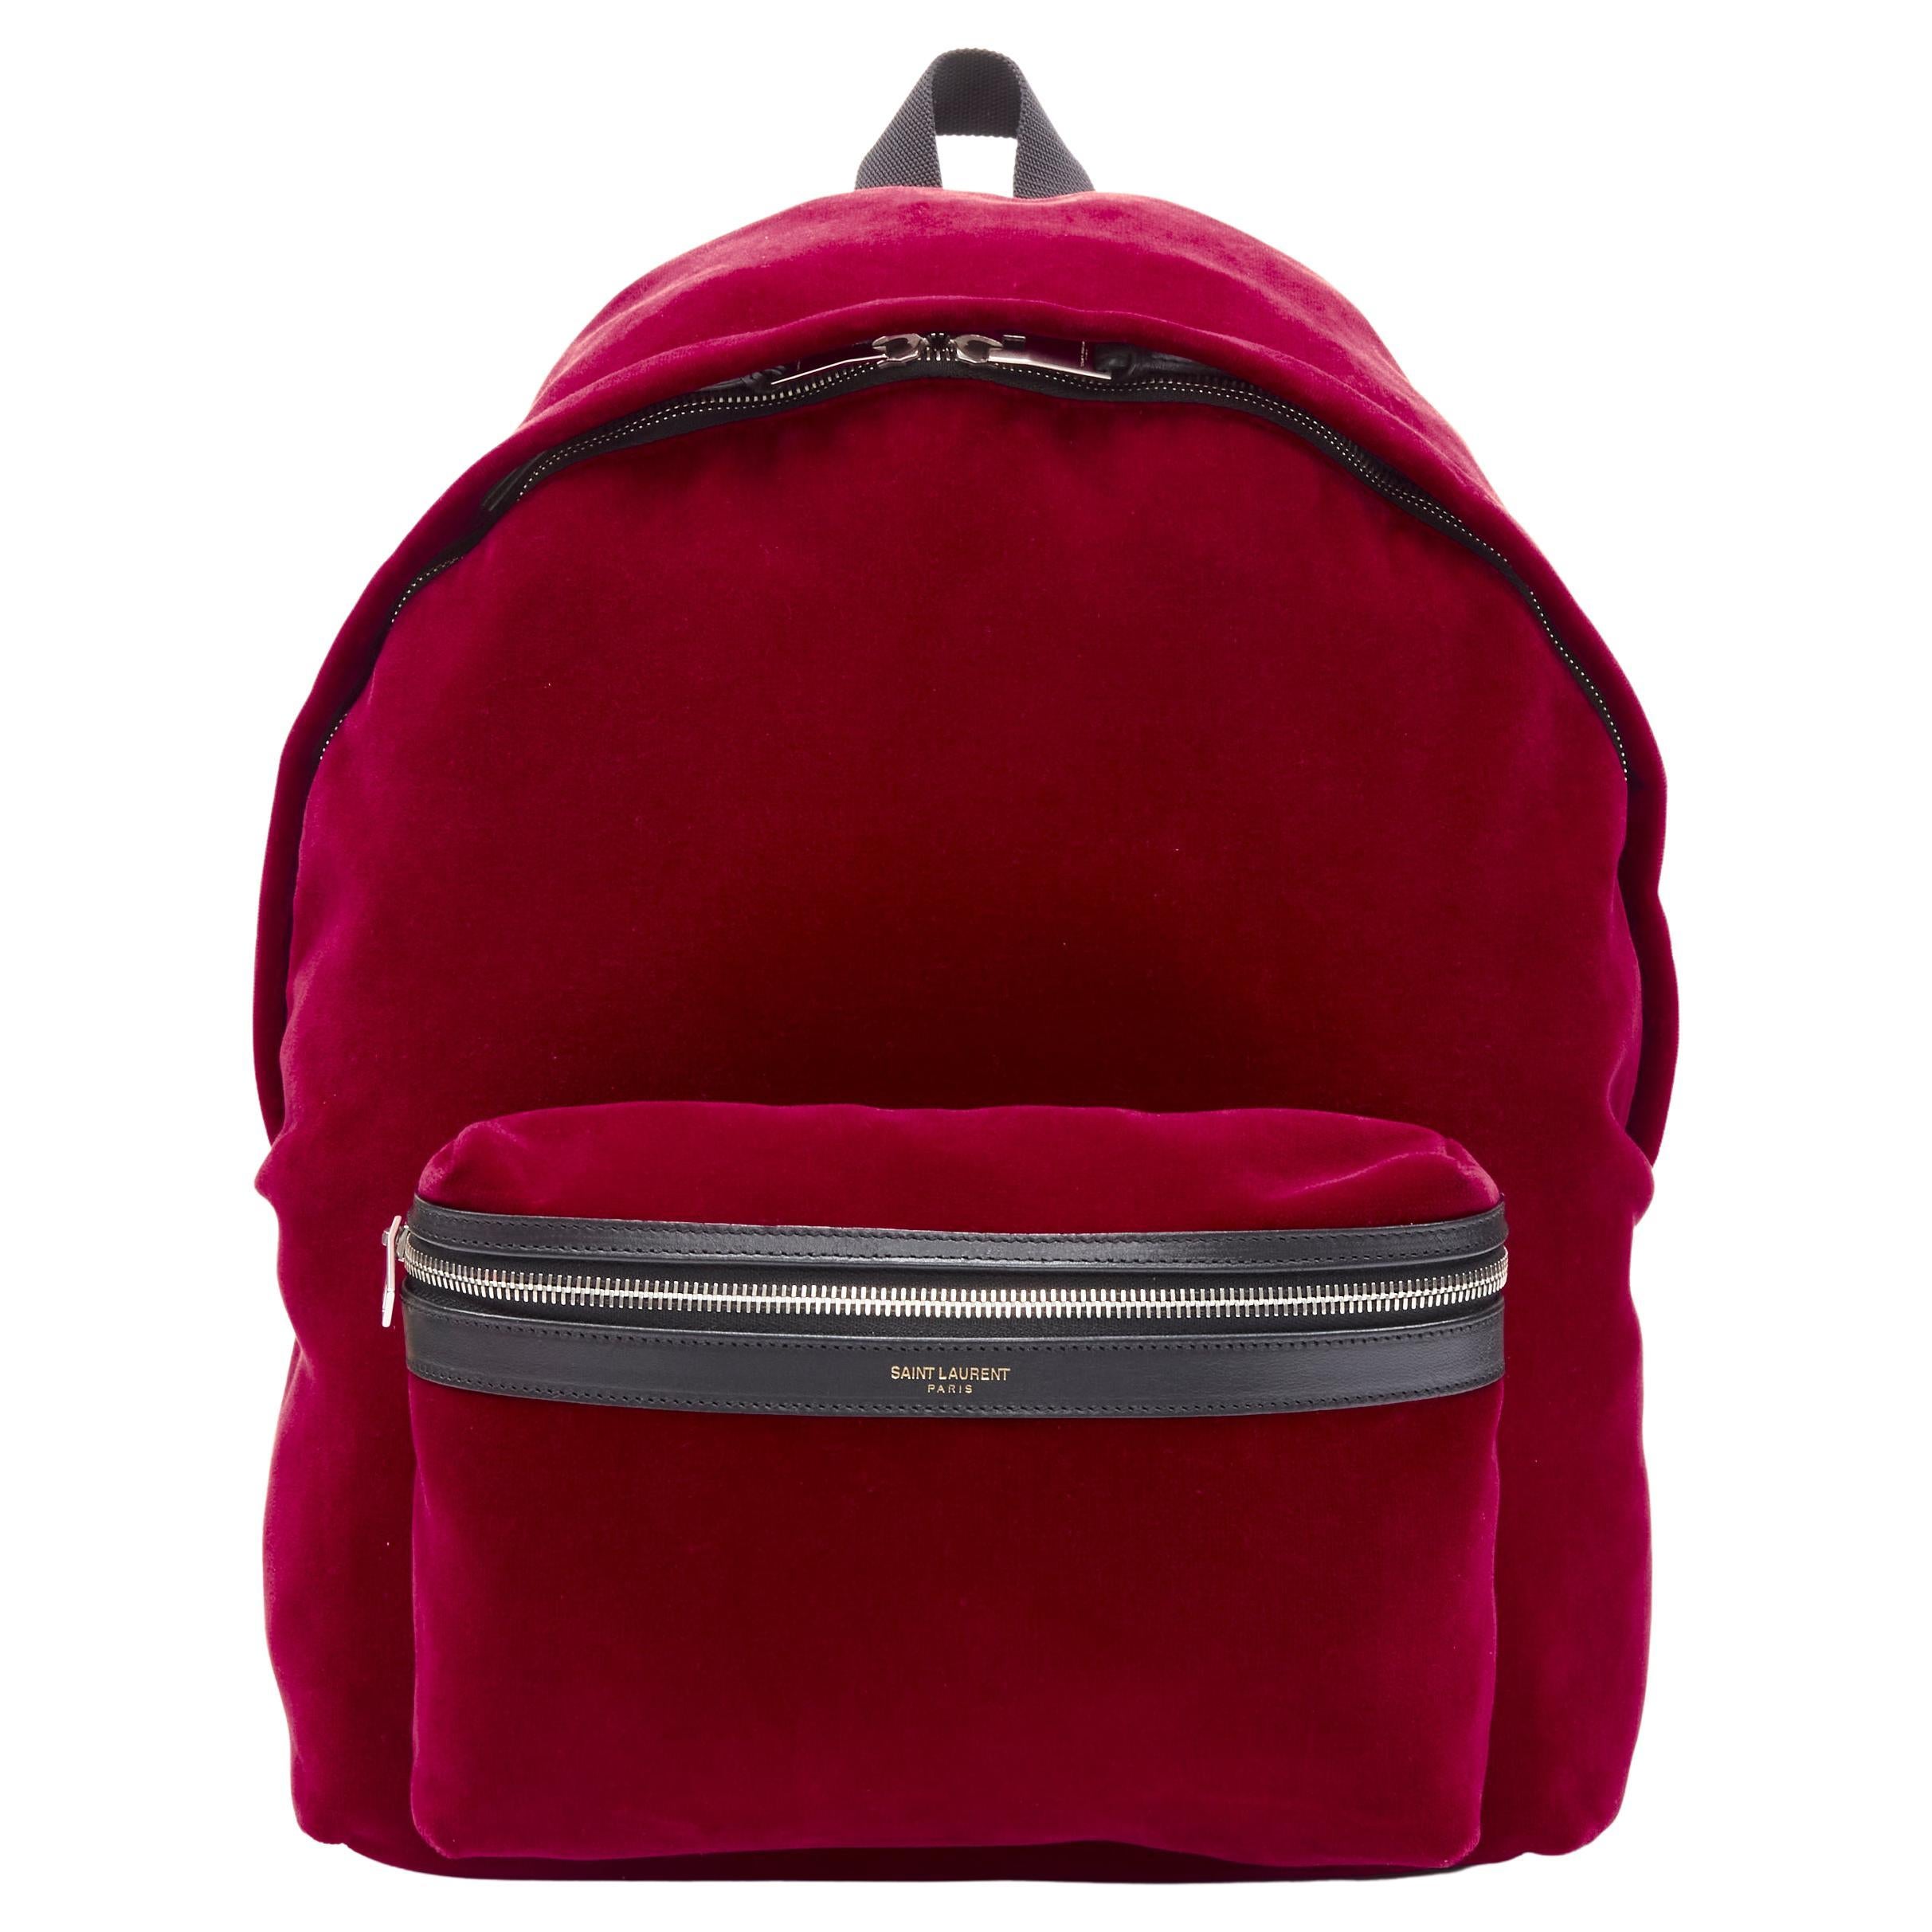 SAINT LAURENT City red velvet black leather trim backpack For Sale